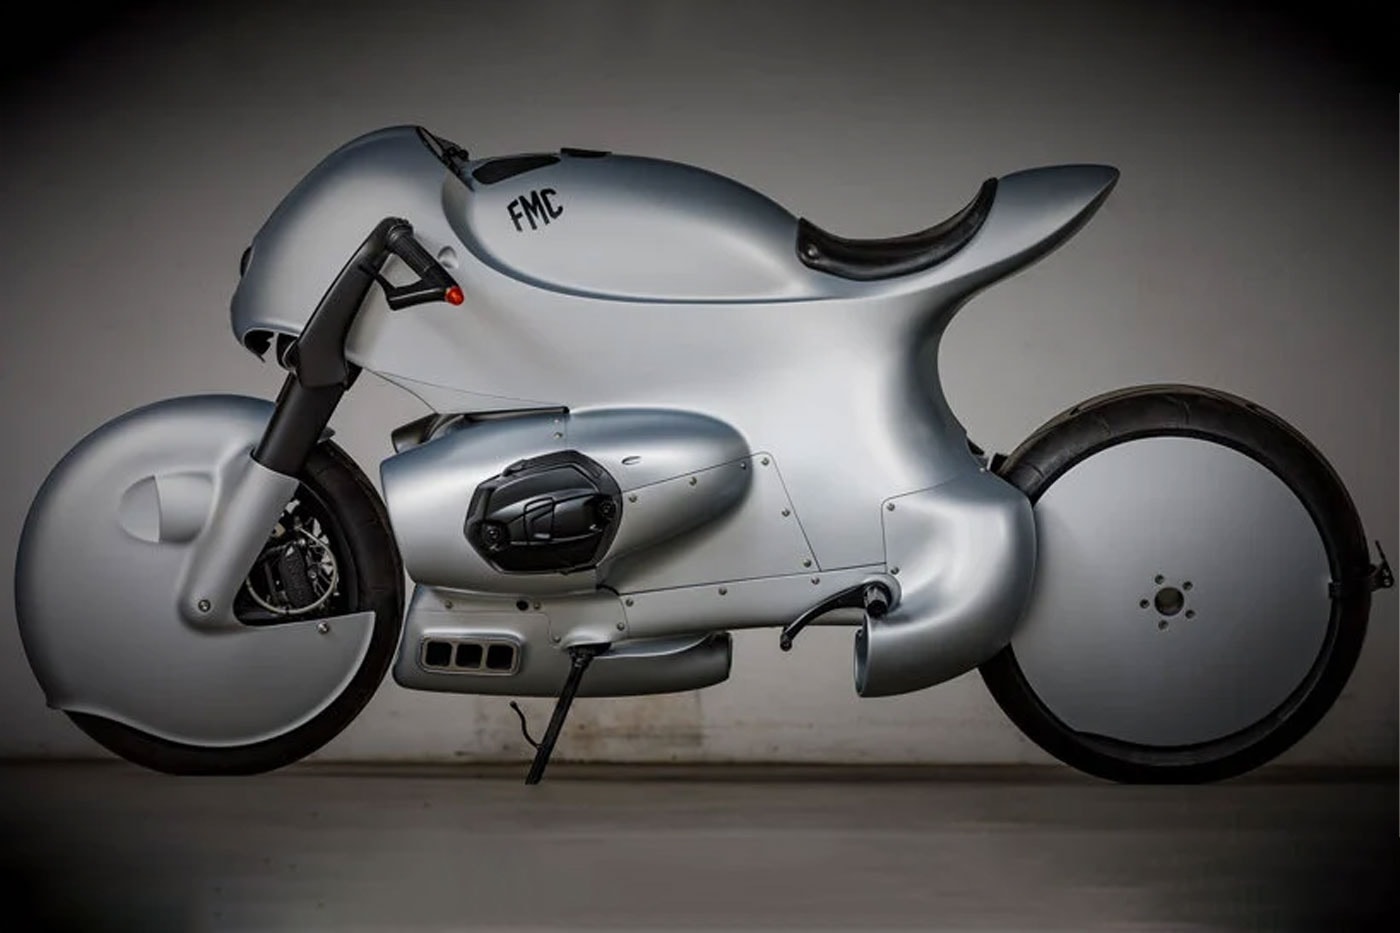 BMW R nineT FMC fabman creations motorbike aluminum body bike shell smooth silver custom images info wayne buys storm